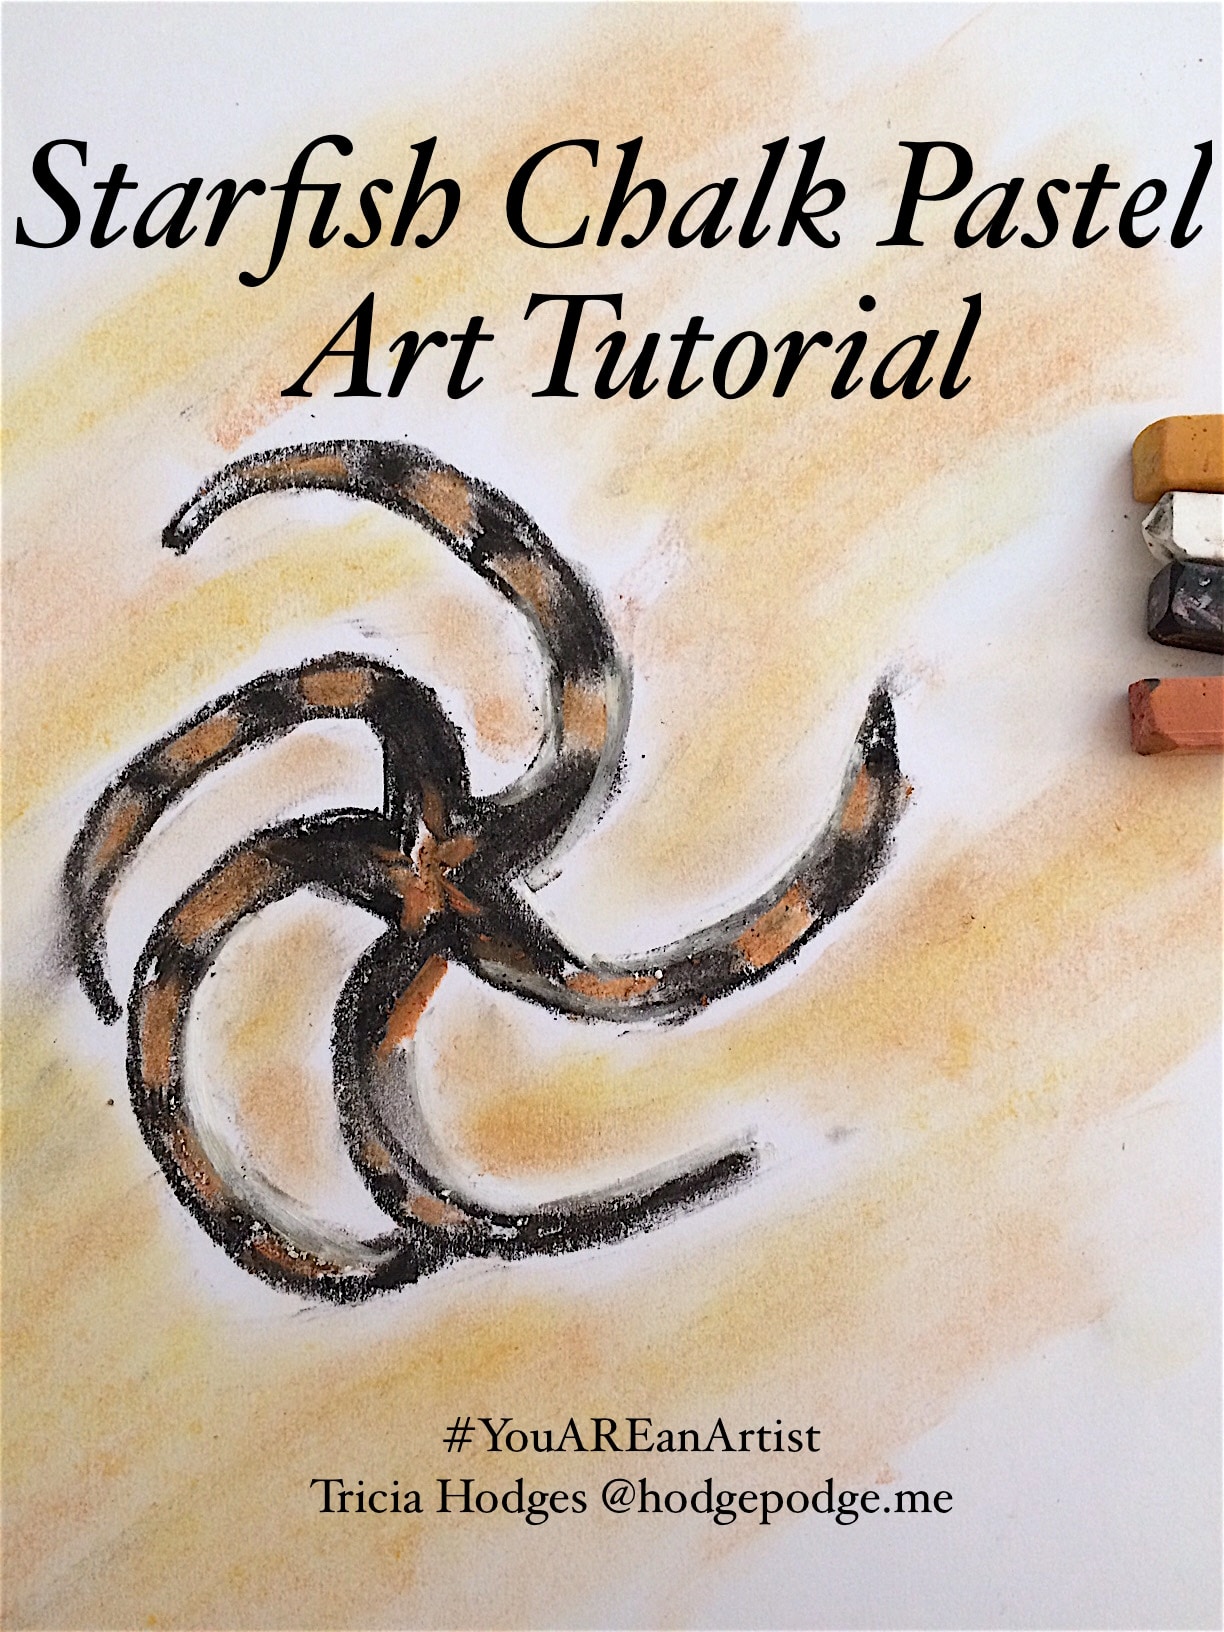 Starfish Chalk Pastel Art Tutorial